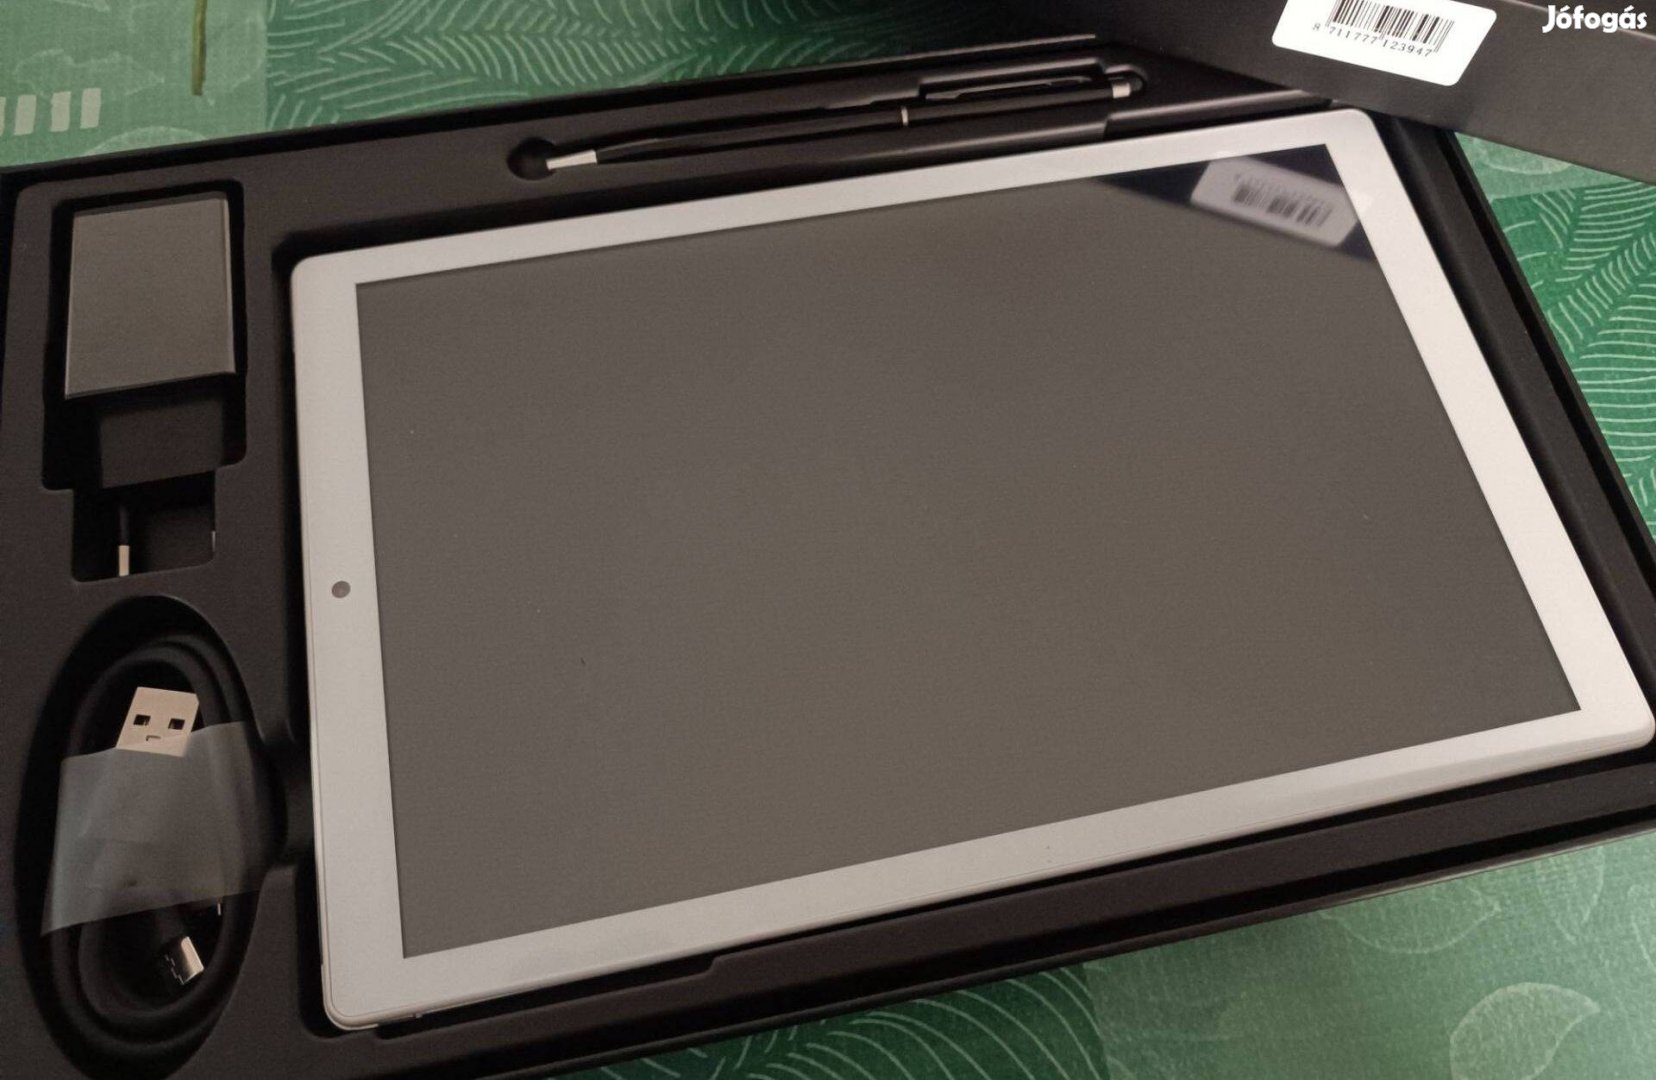 Simplori android tablet (6gb + 128 gb)